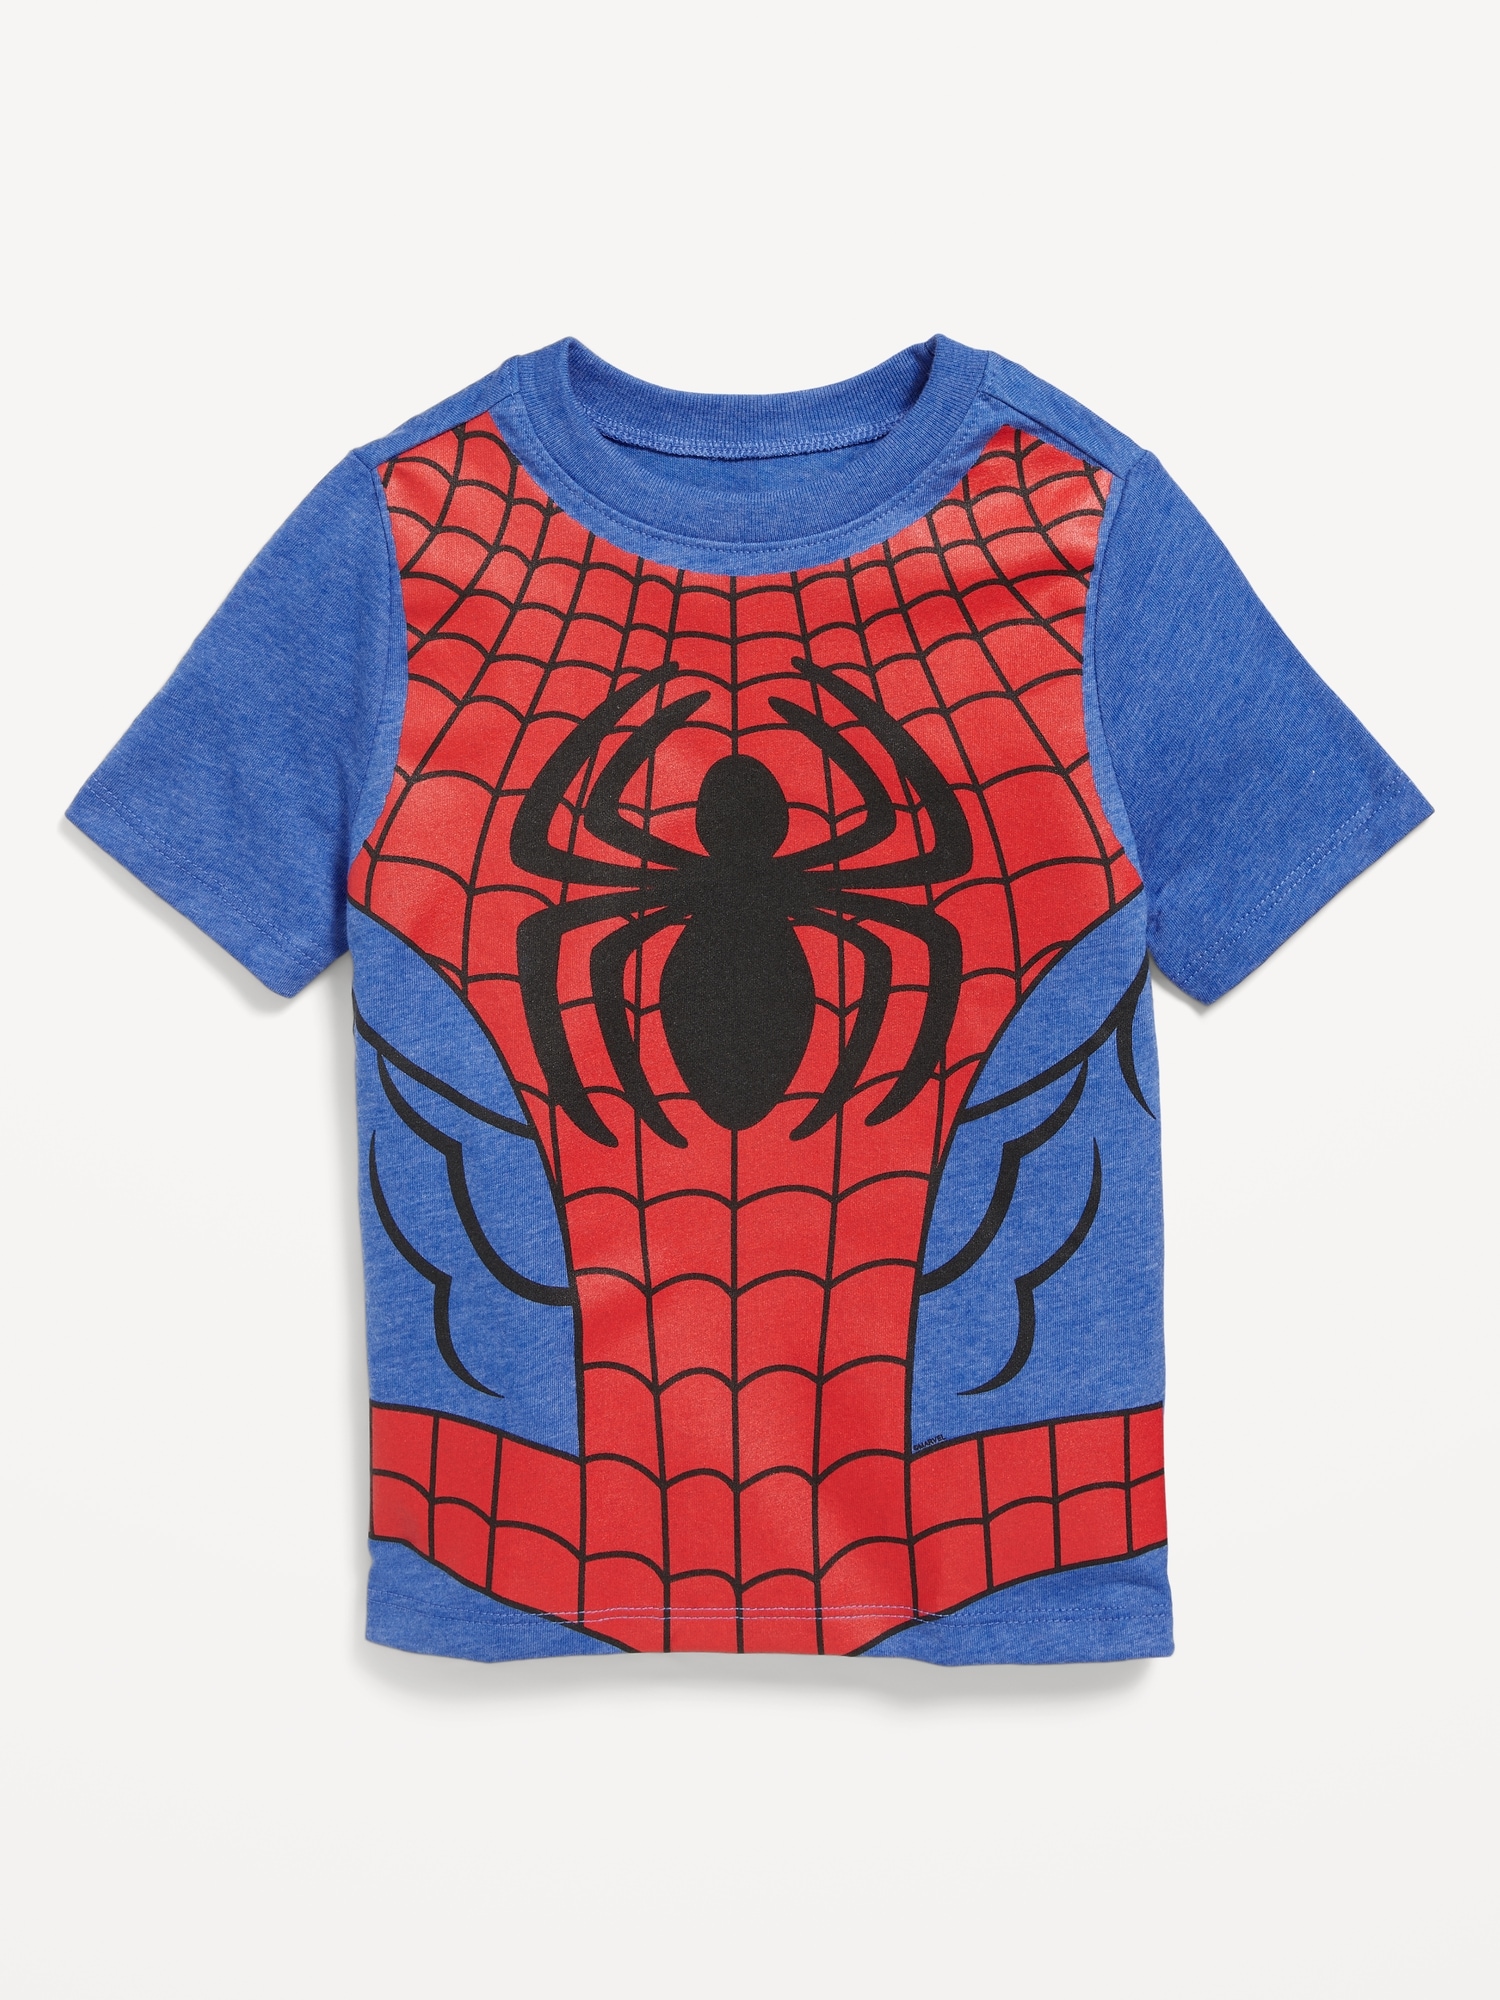 Marvel Spider-Man Unisex Costume T-Shirt for Toddler Hot Deal